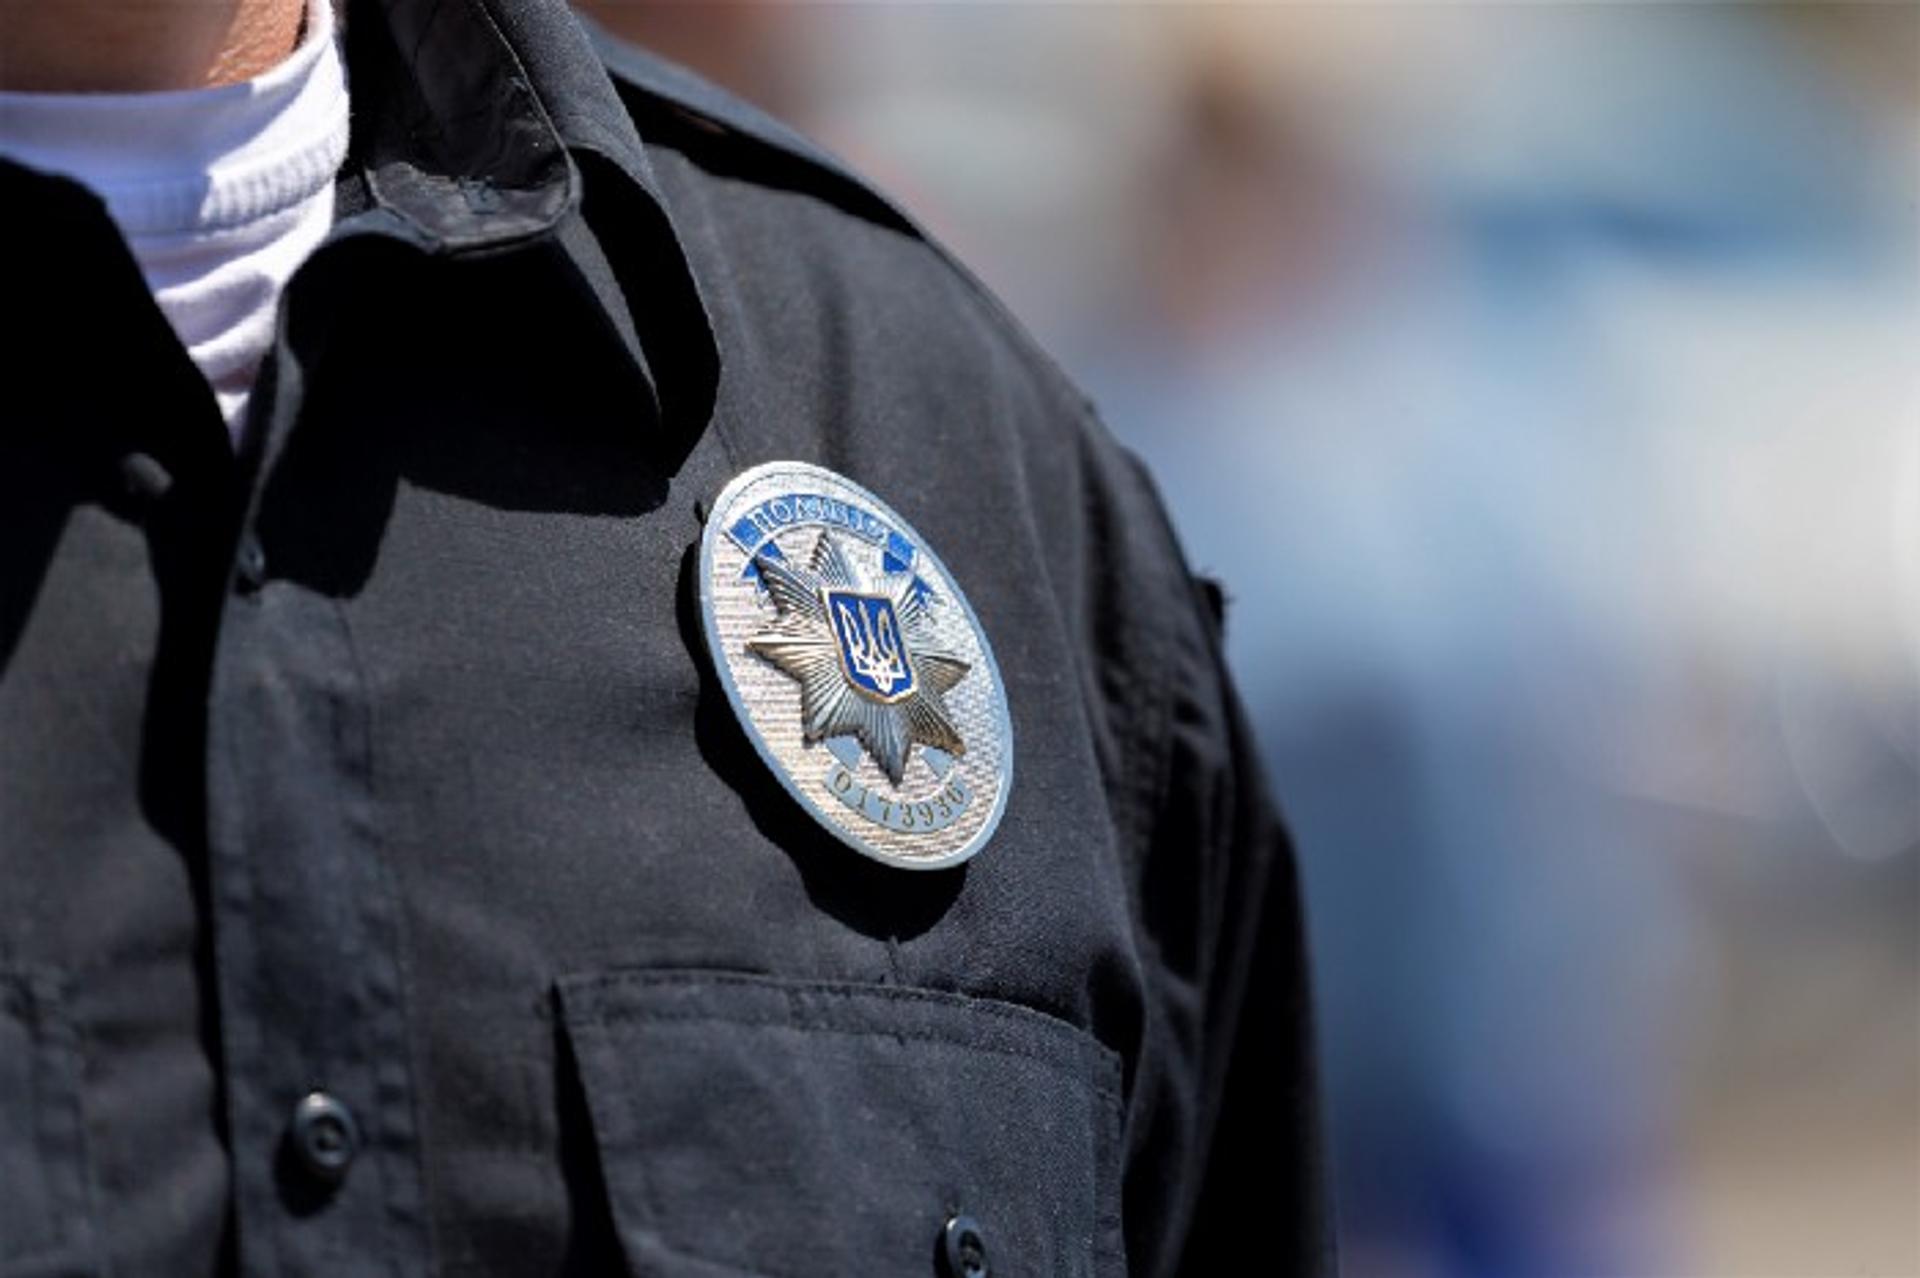 Close up of a Ukrainian police uniform badge